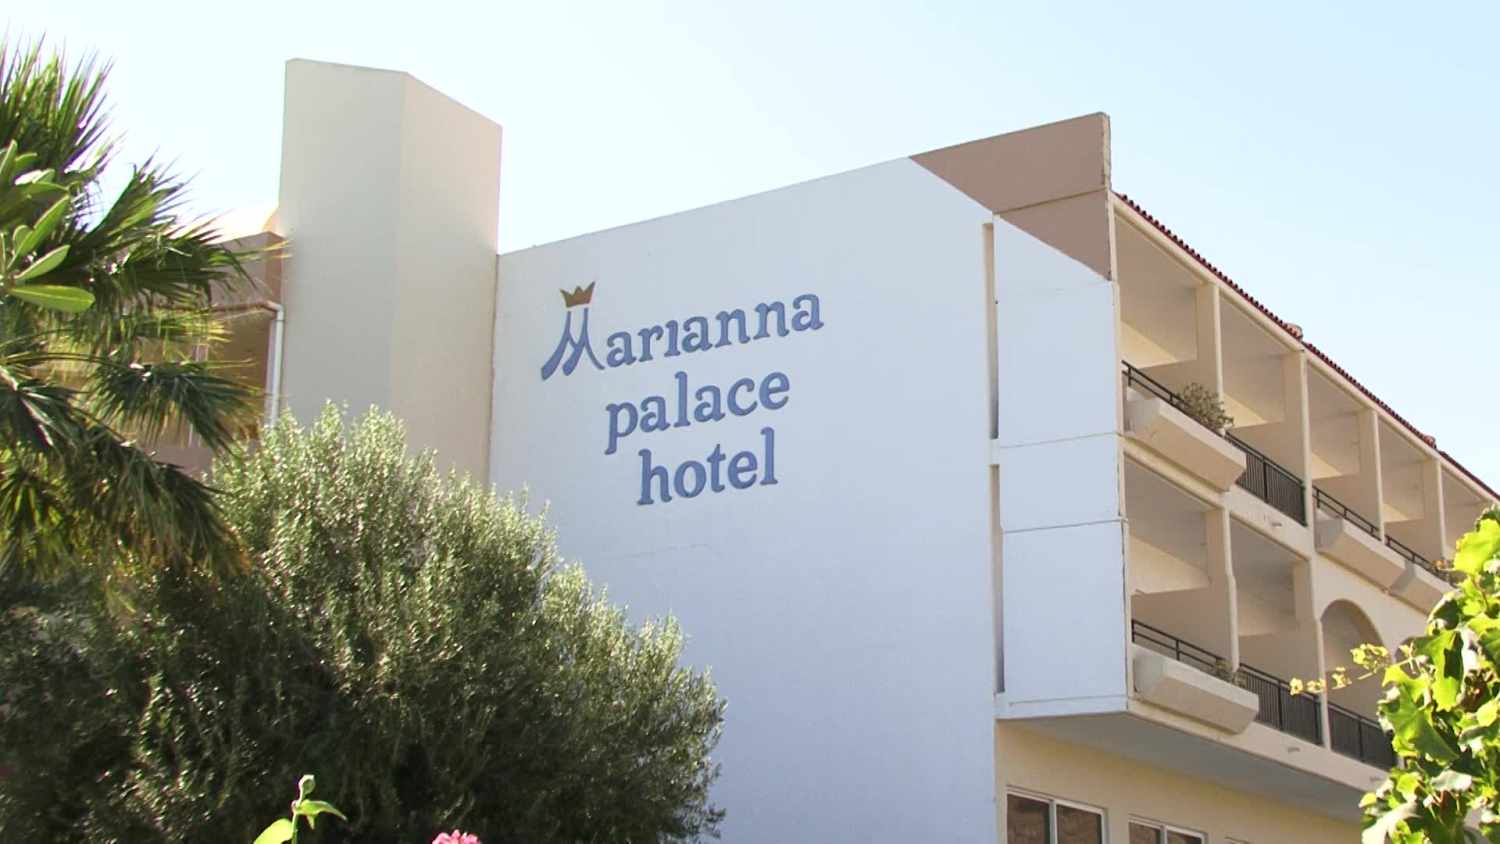 Marianna Palace Hotel, Kolymbia, Rhodos, Griekenland